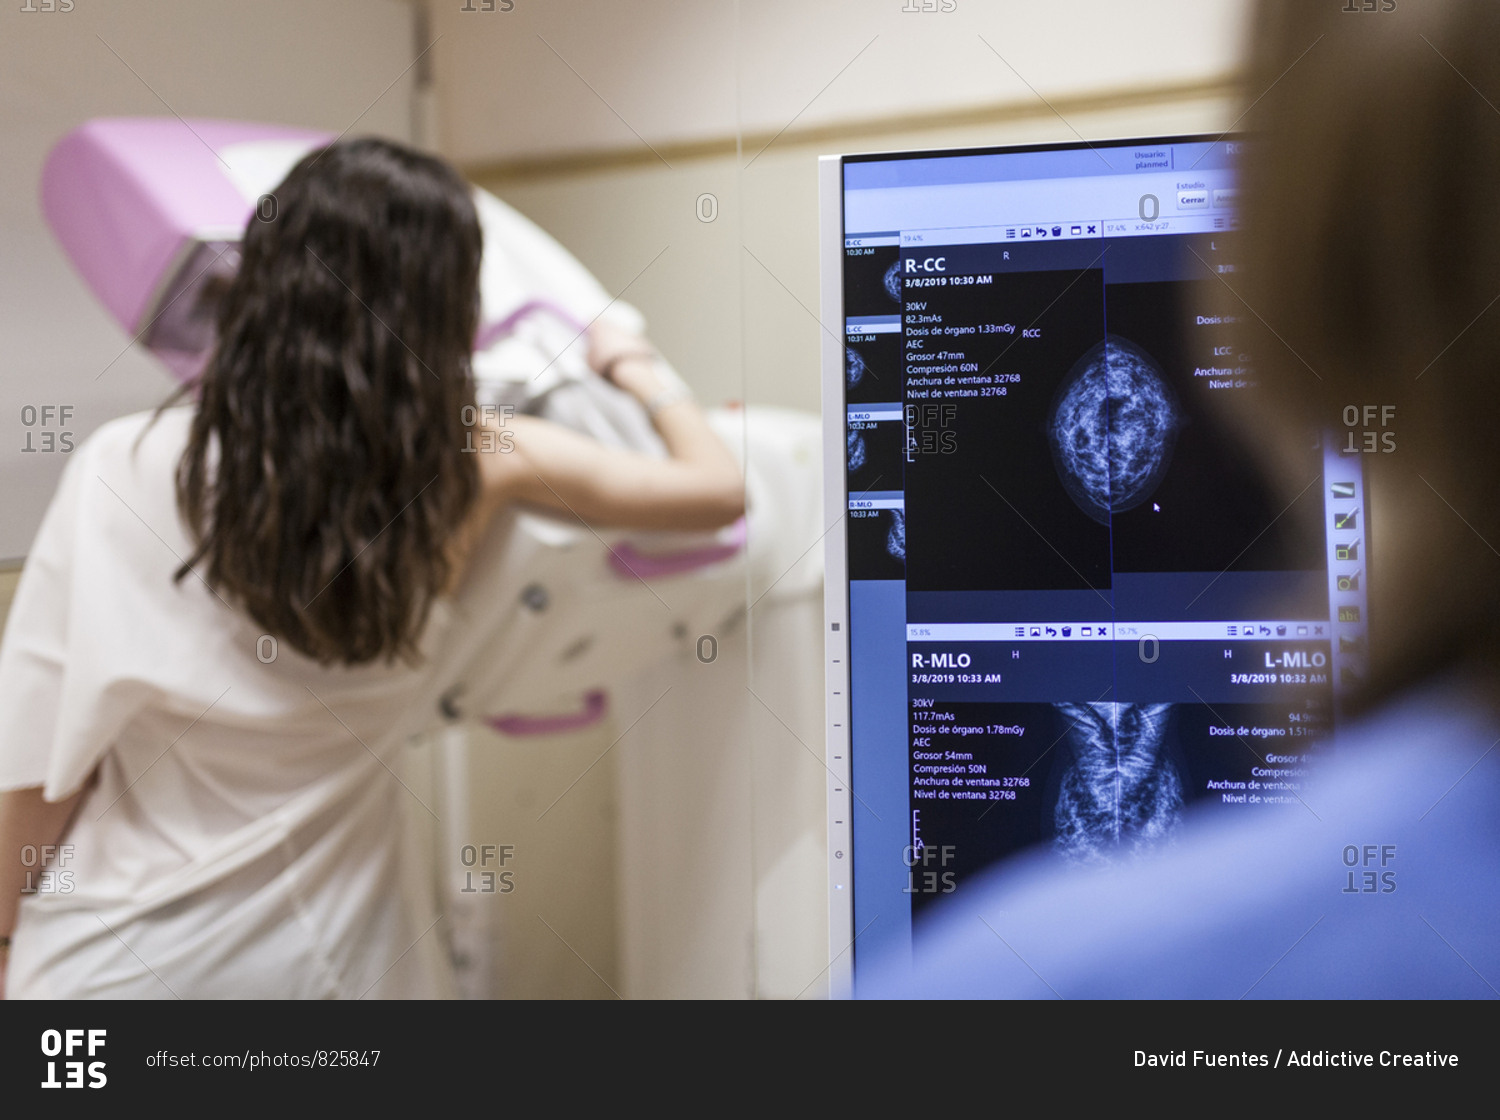 Female patient beside digital mammography unit